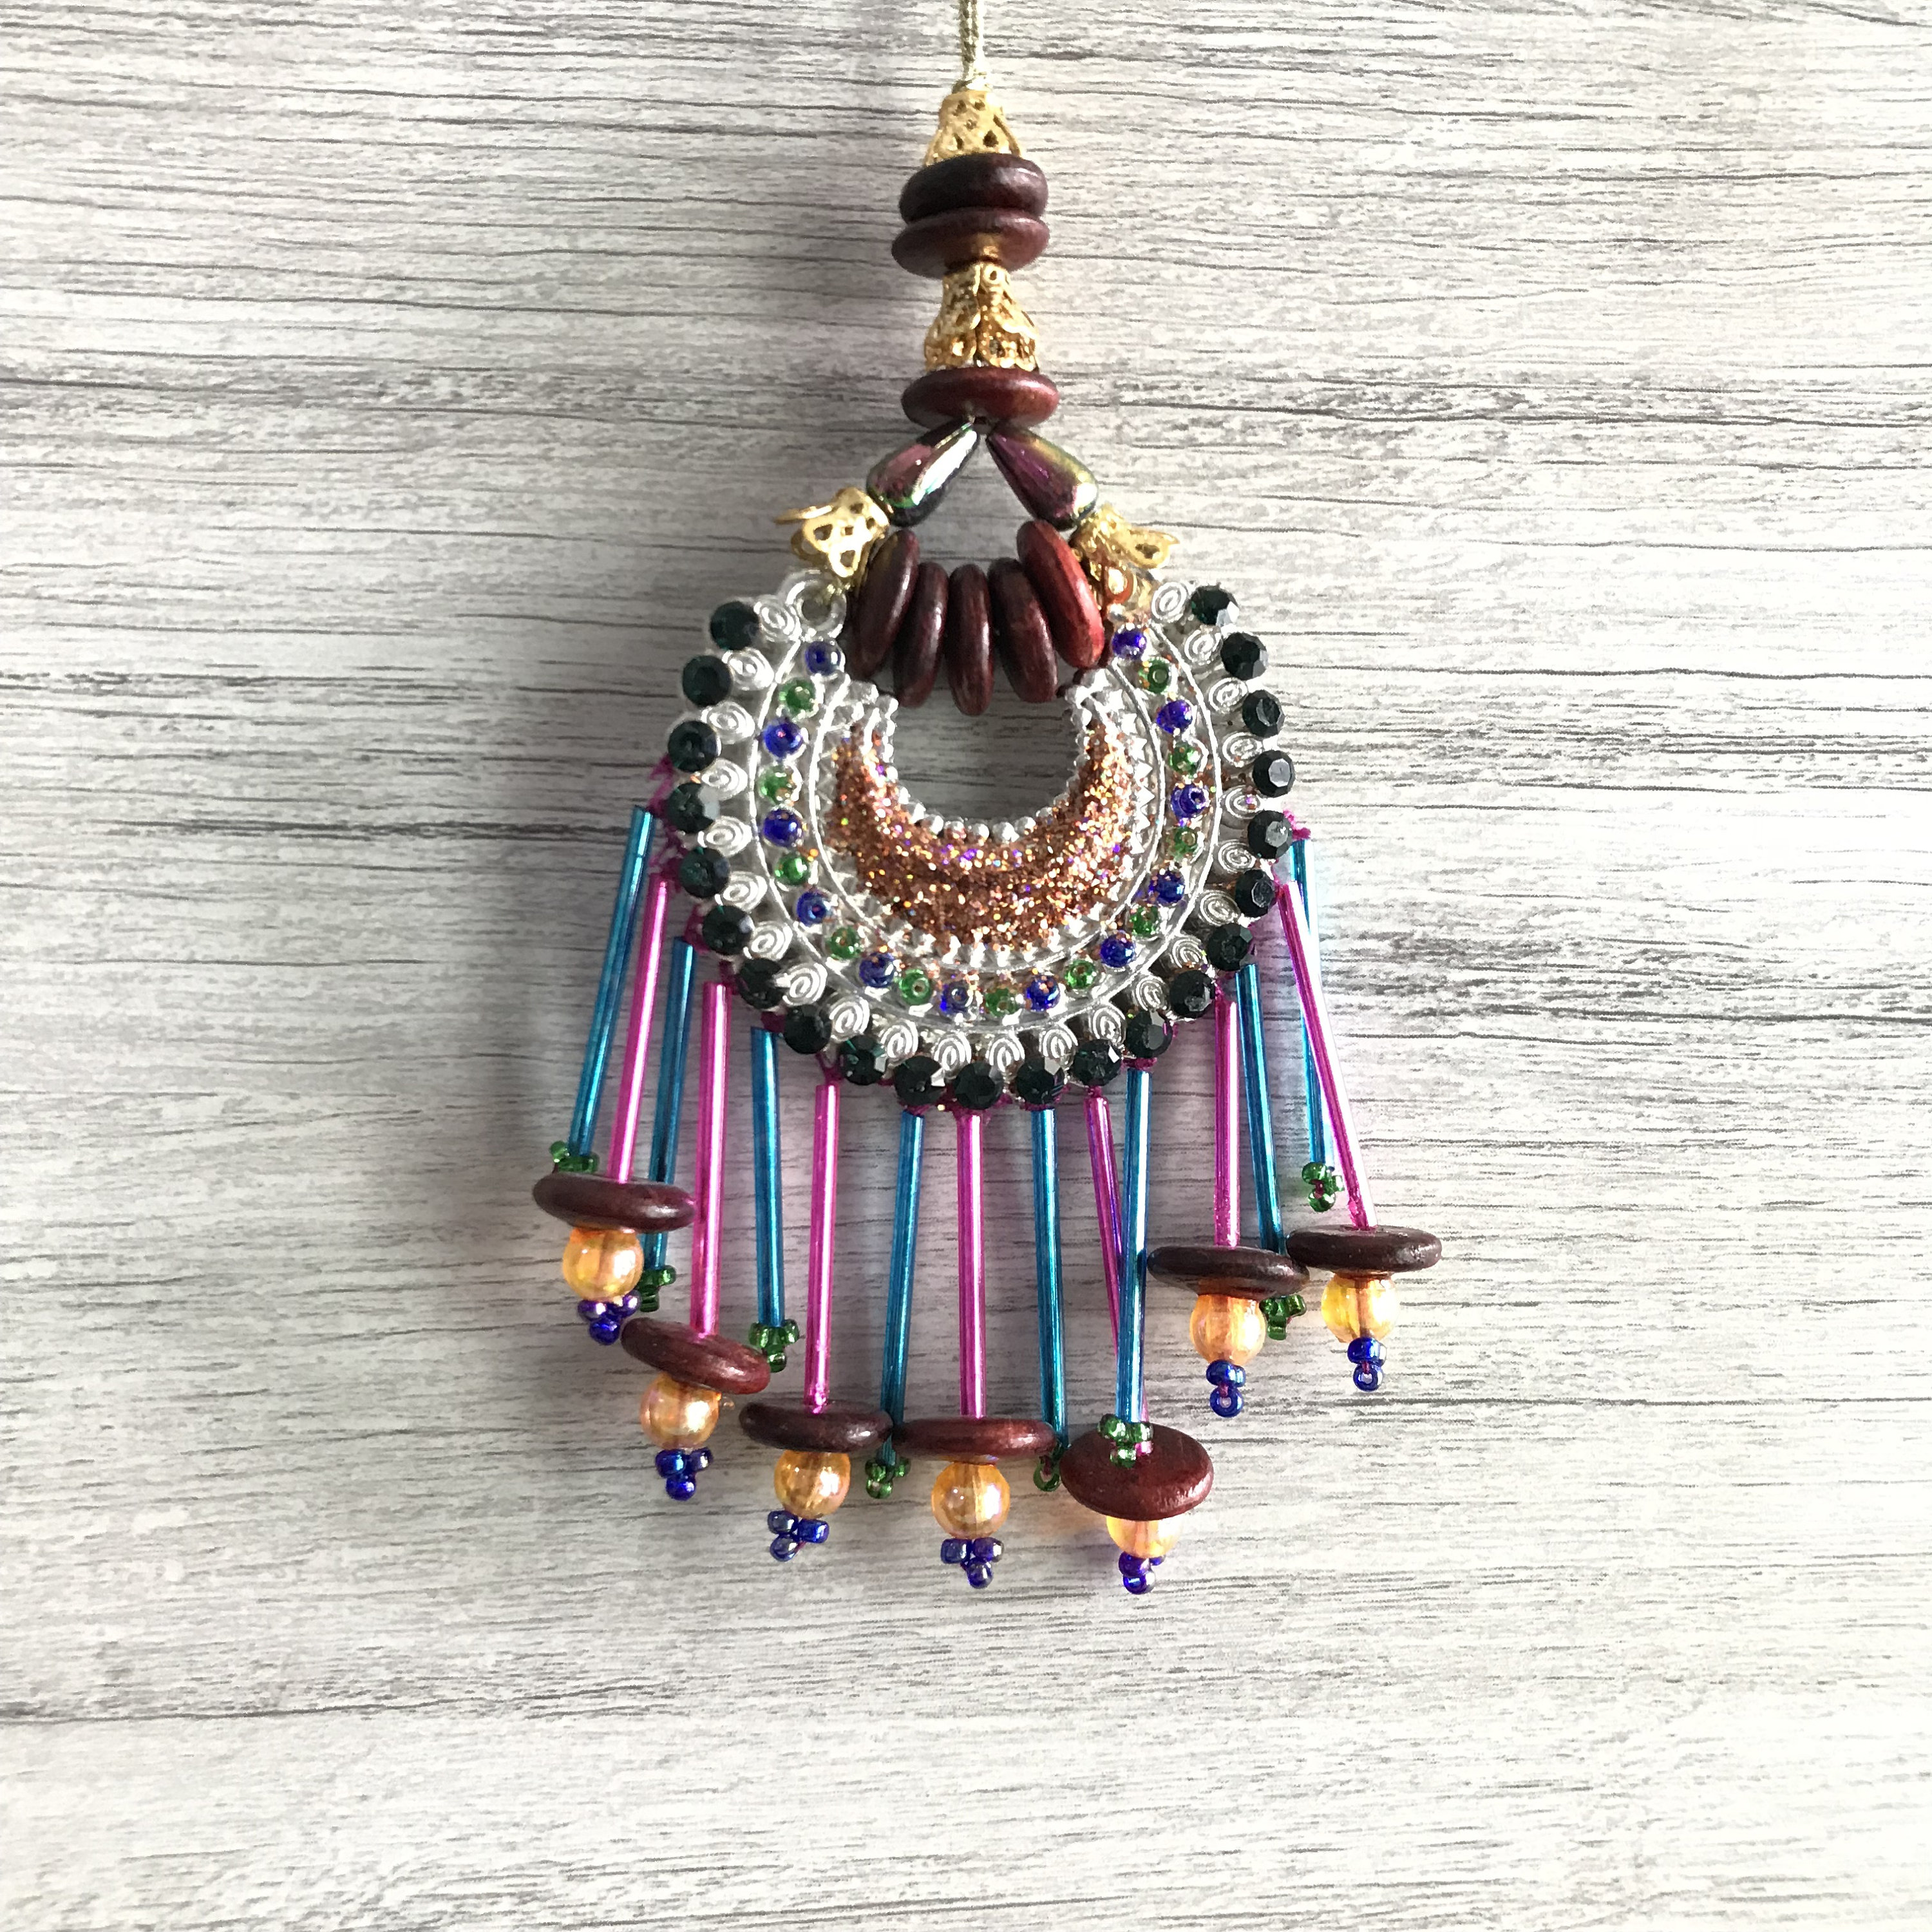 8 Pieces Viscose Thread Tassels Jewelry Decorative Handmade DIY Crafting  Tassels Christmas Home Decor Charms Gypsy Boho Latkan Keychains